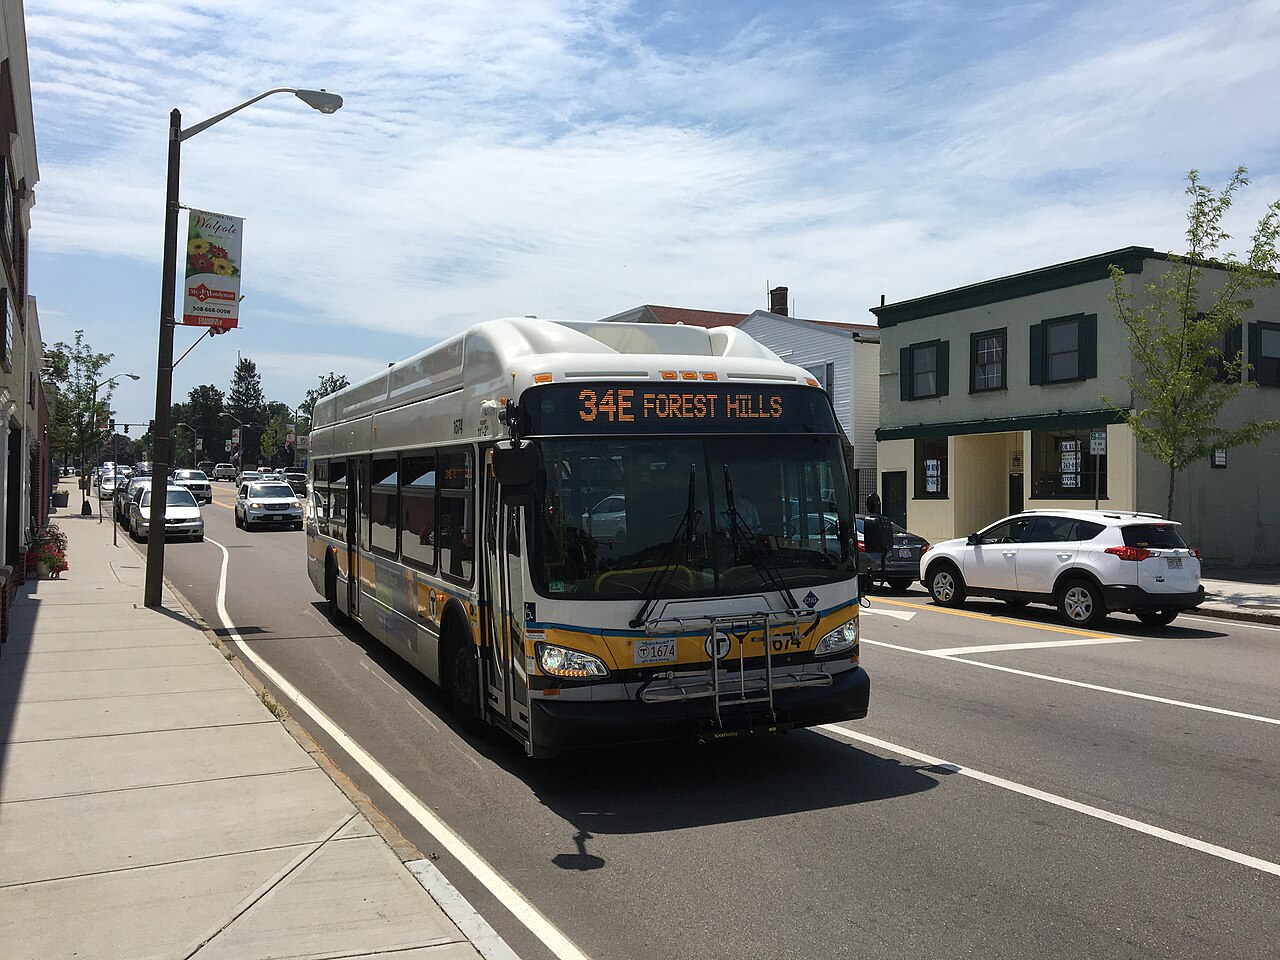 File:MBTA route 34E bus in Walpole, June 2017.jpg - Wikipedia